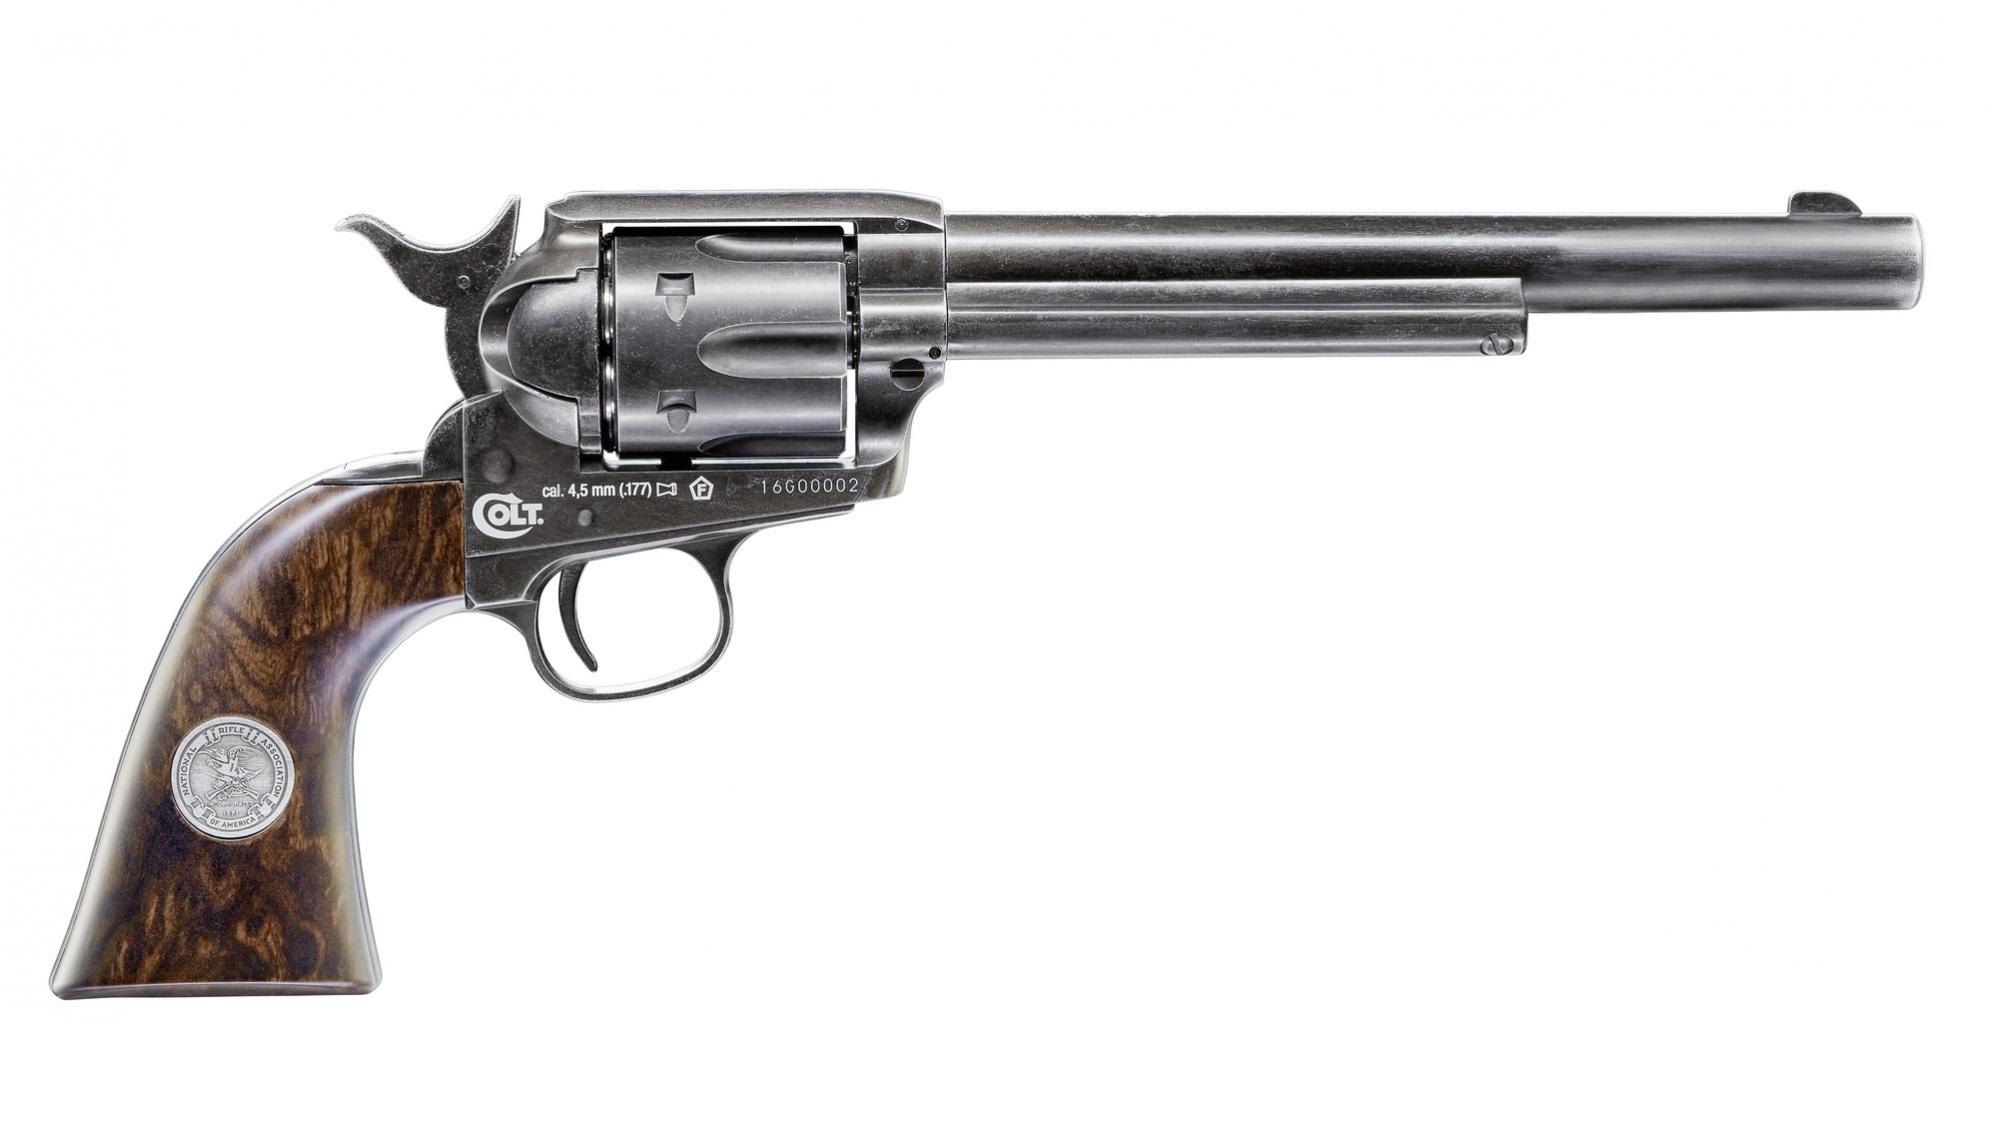 Colt Single Action Army 45 NRA Edition CO2-Revolver 4,5mm Diabolo (SAA), 7,5" Lauf